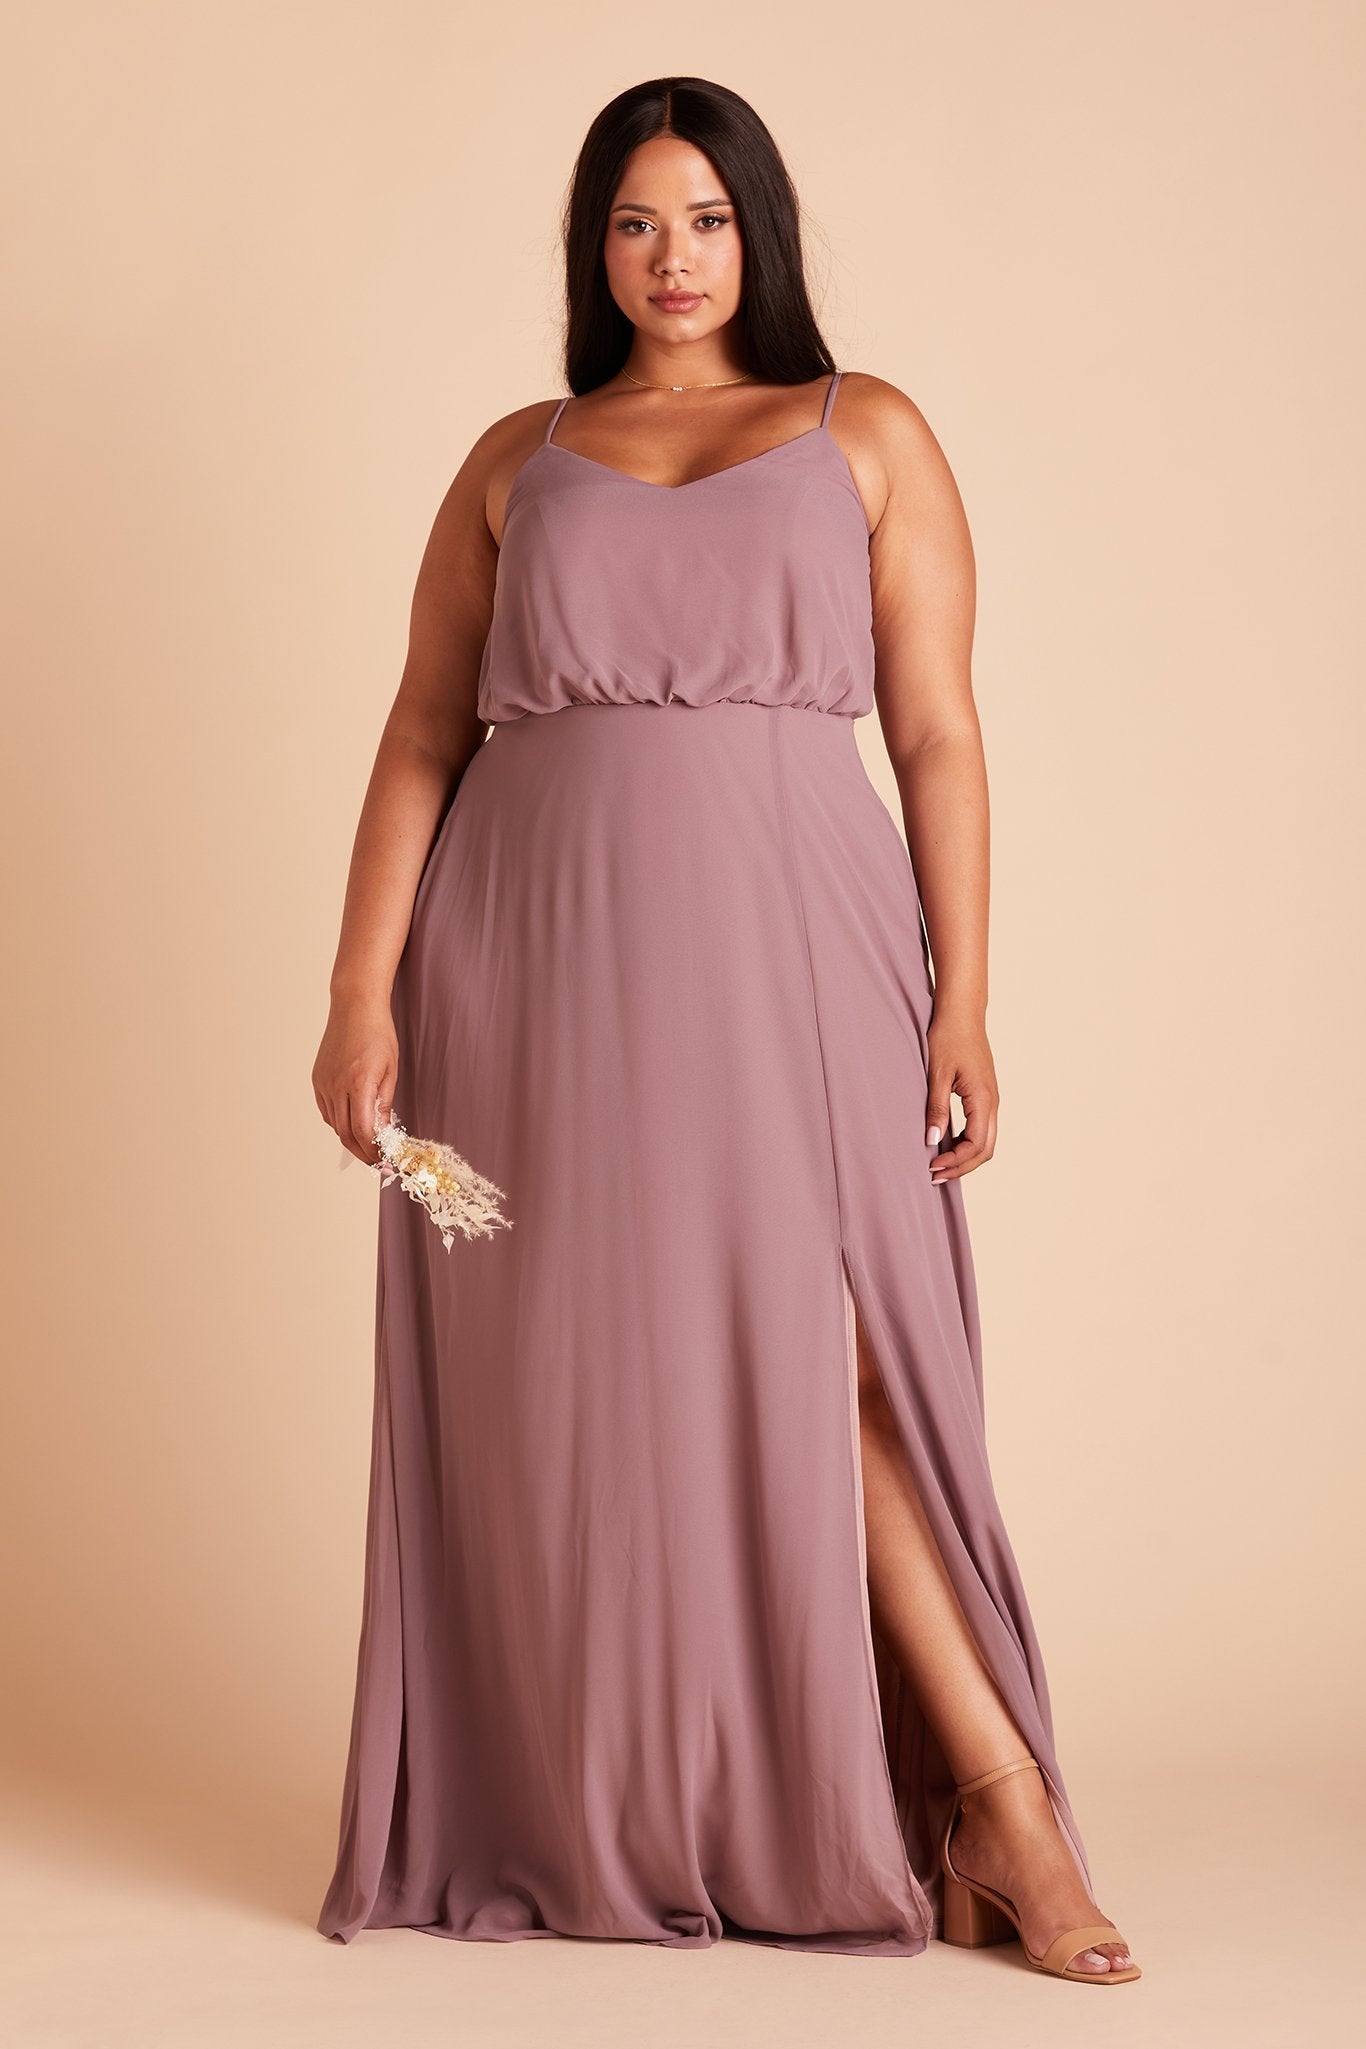 Gwennie plus size bridesmaid dress with slit in dark mauve chiffon by Birdy Grey, front view